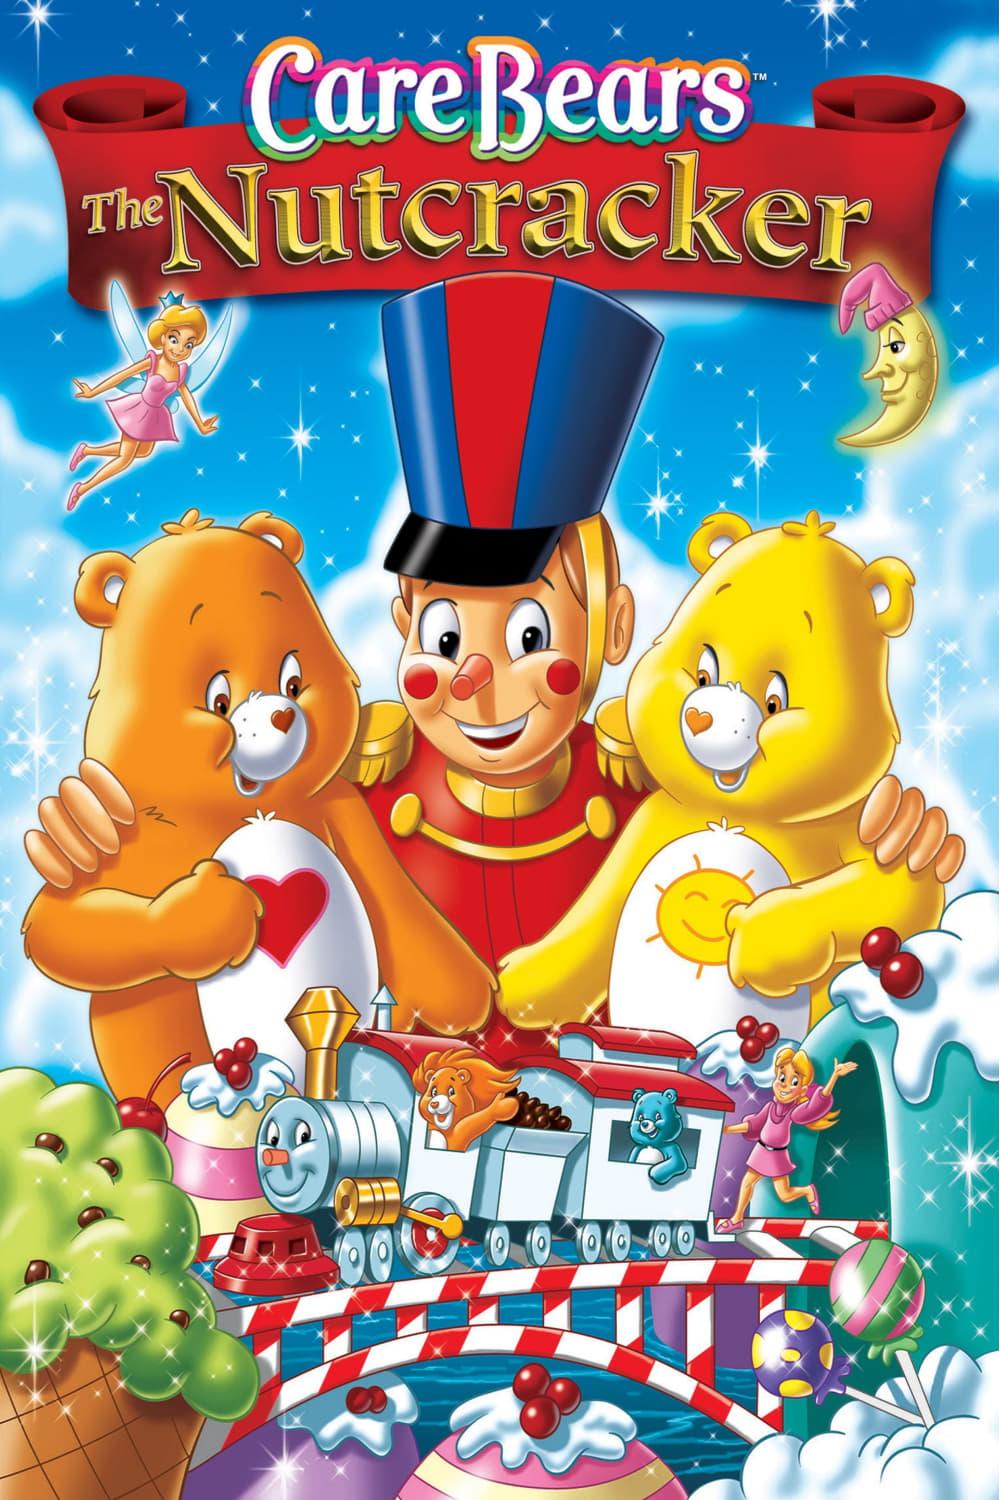 Care Bears Nutcracker Suite poster